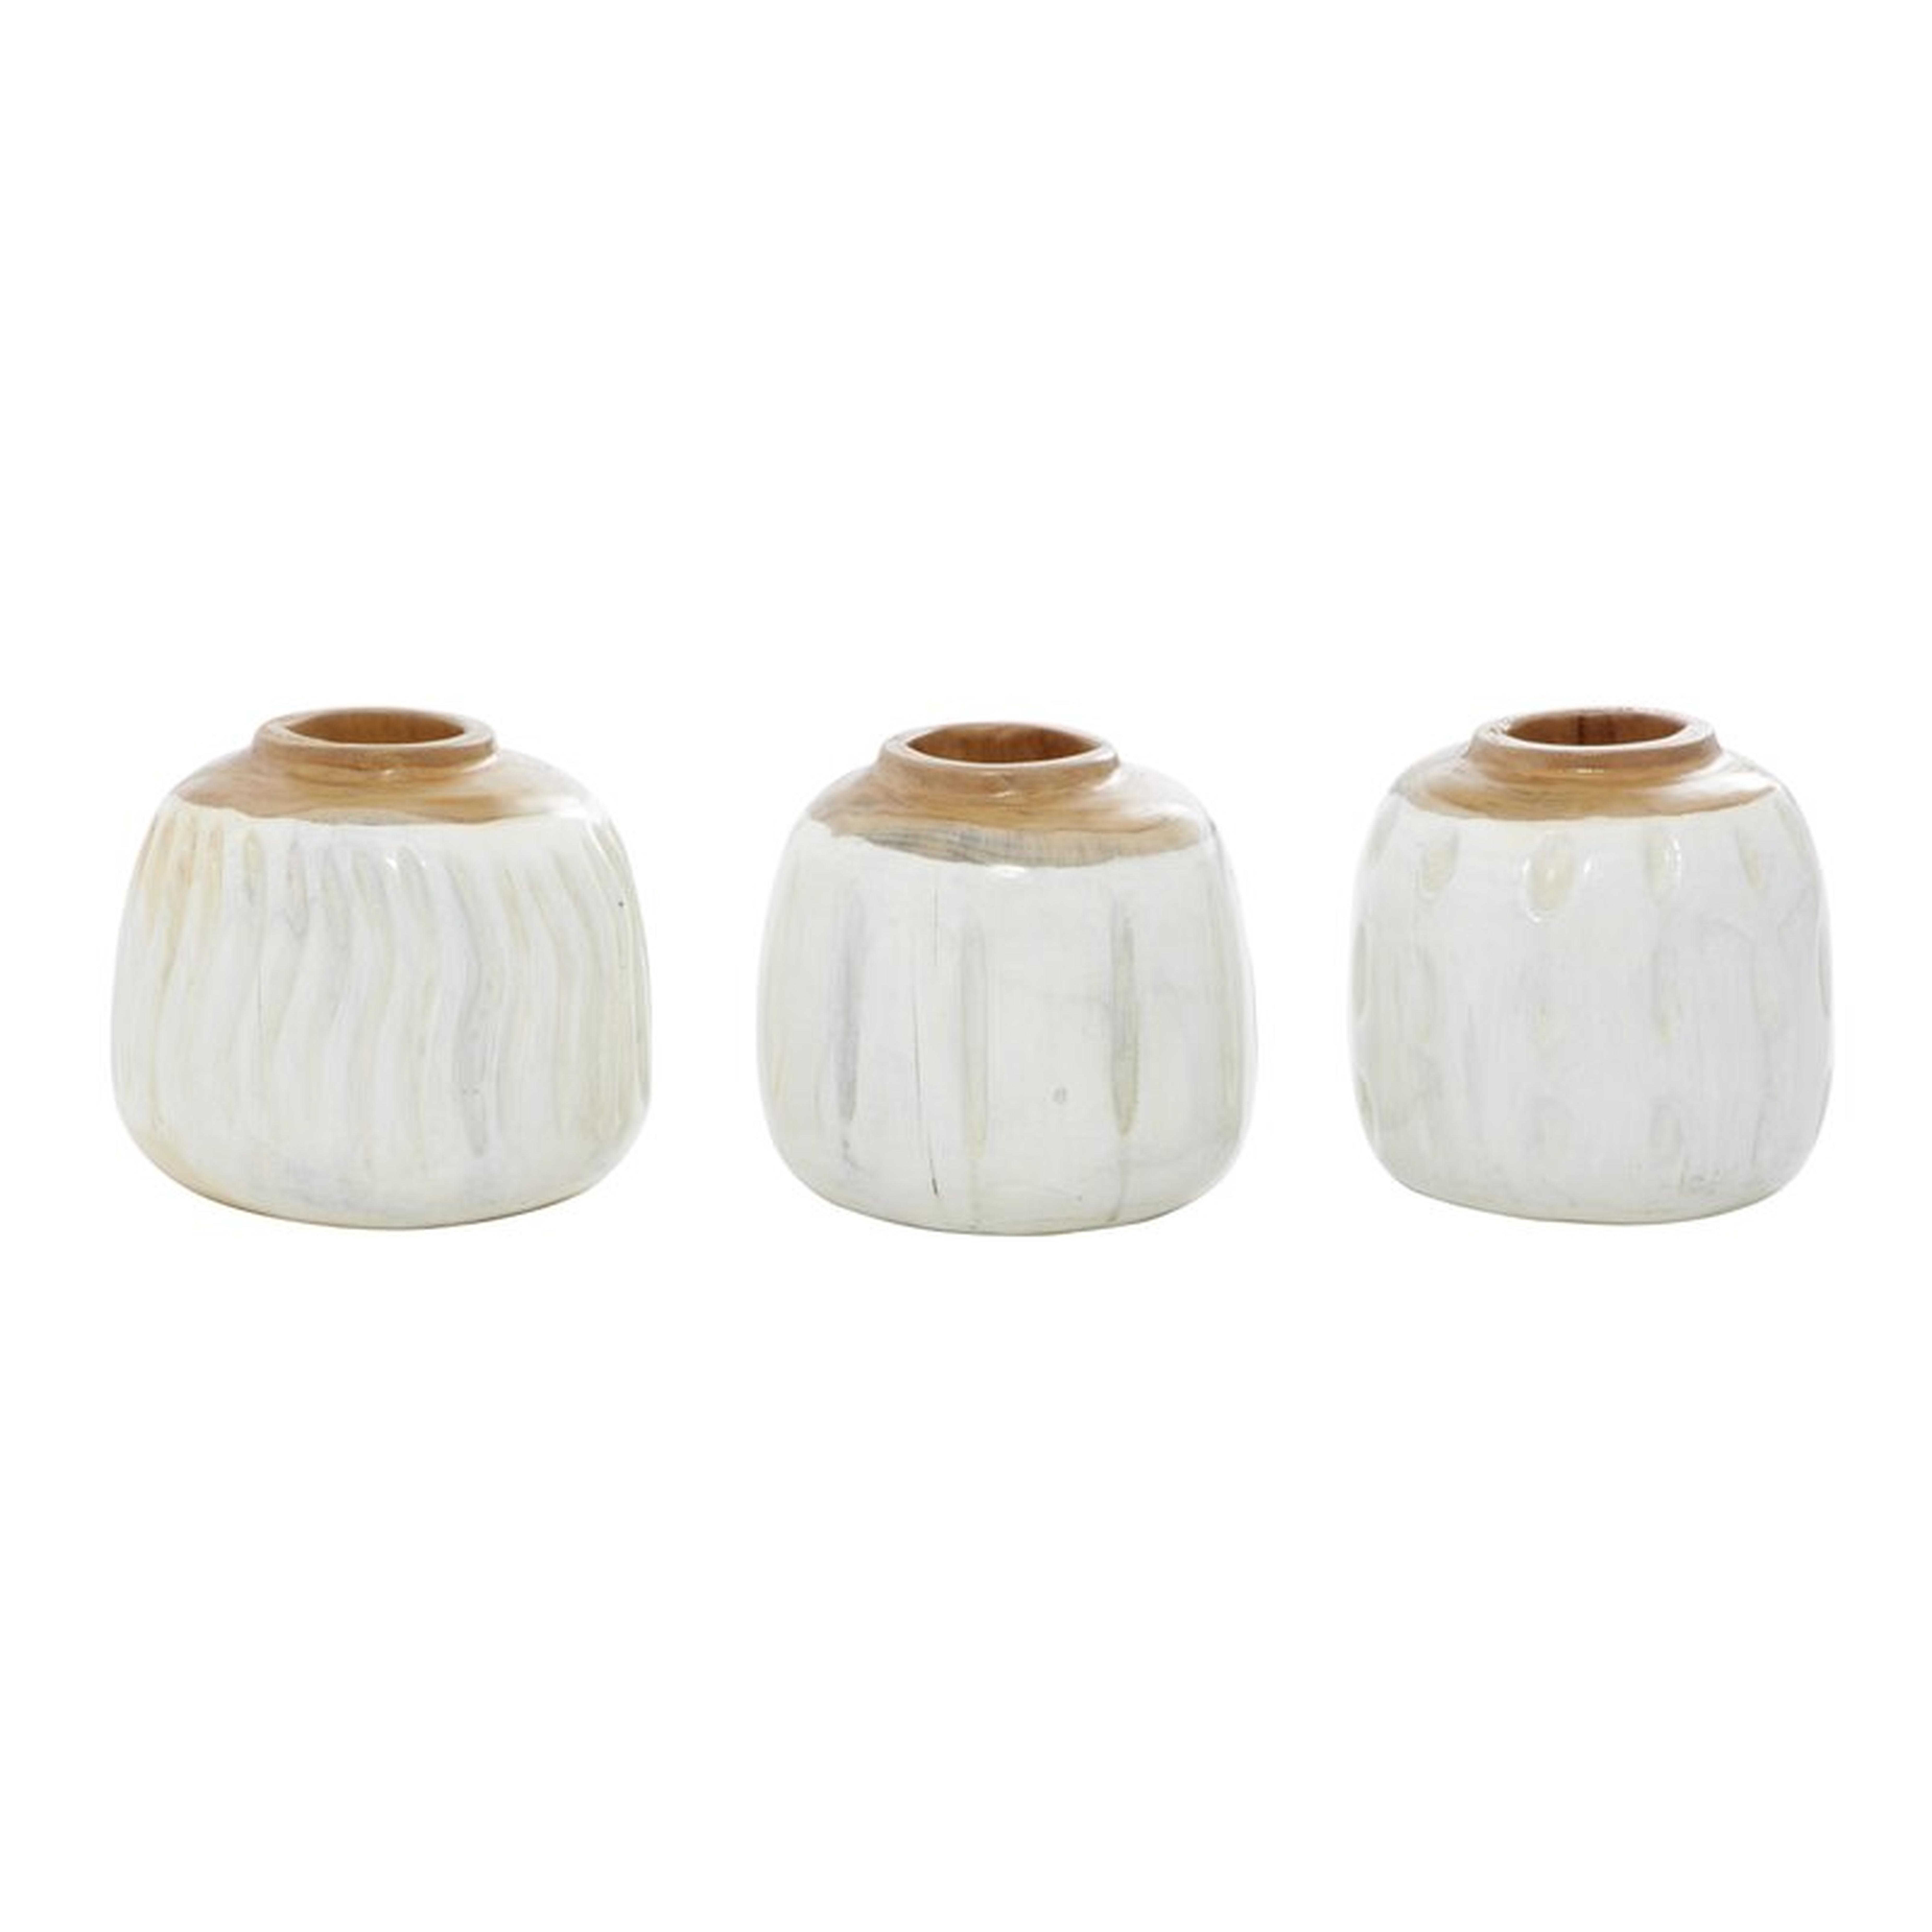 Bonita White Wood Table Vases, Set of 3 - Wayfair